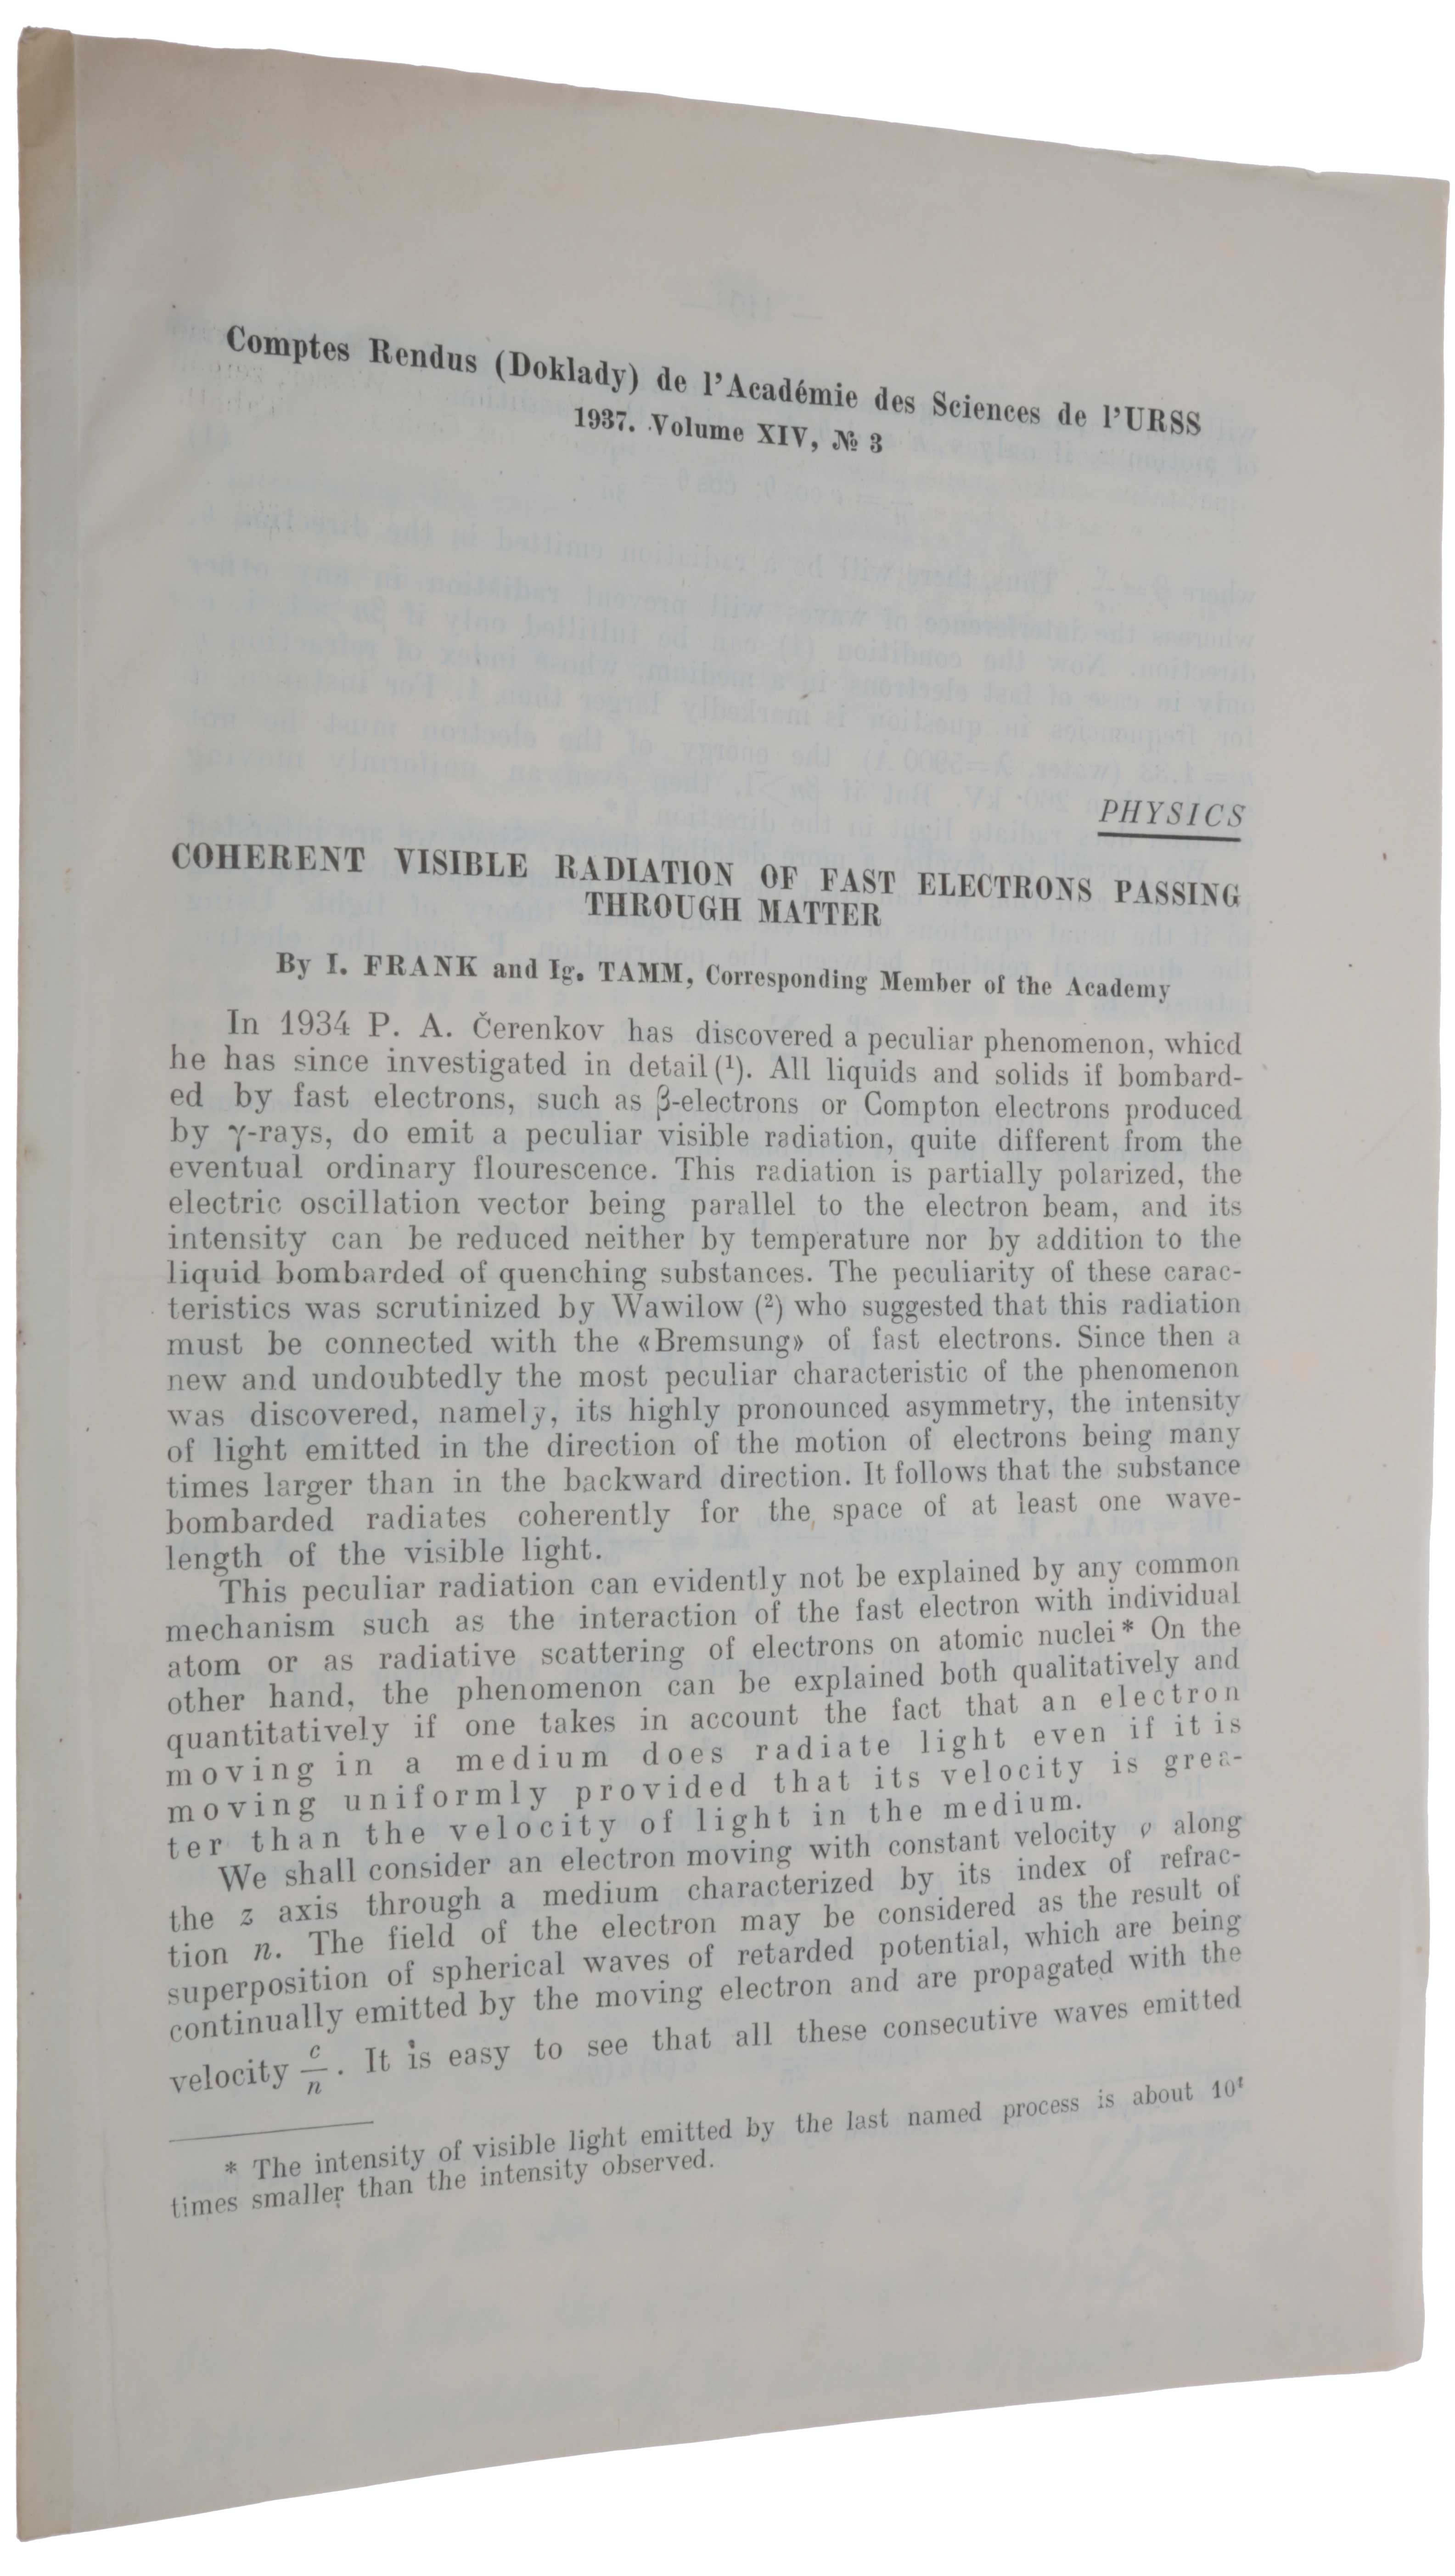 Item #5969 Coherent visible radiation of fast electrons passing through matter. Offprint from: Comptes Rendus (Doklady) de l’Academie des Sciences de l’URSS, Vol. XIV, No. 3, 1937. Ilya FRANK, Igor TAMM.